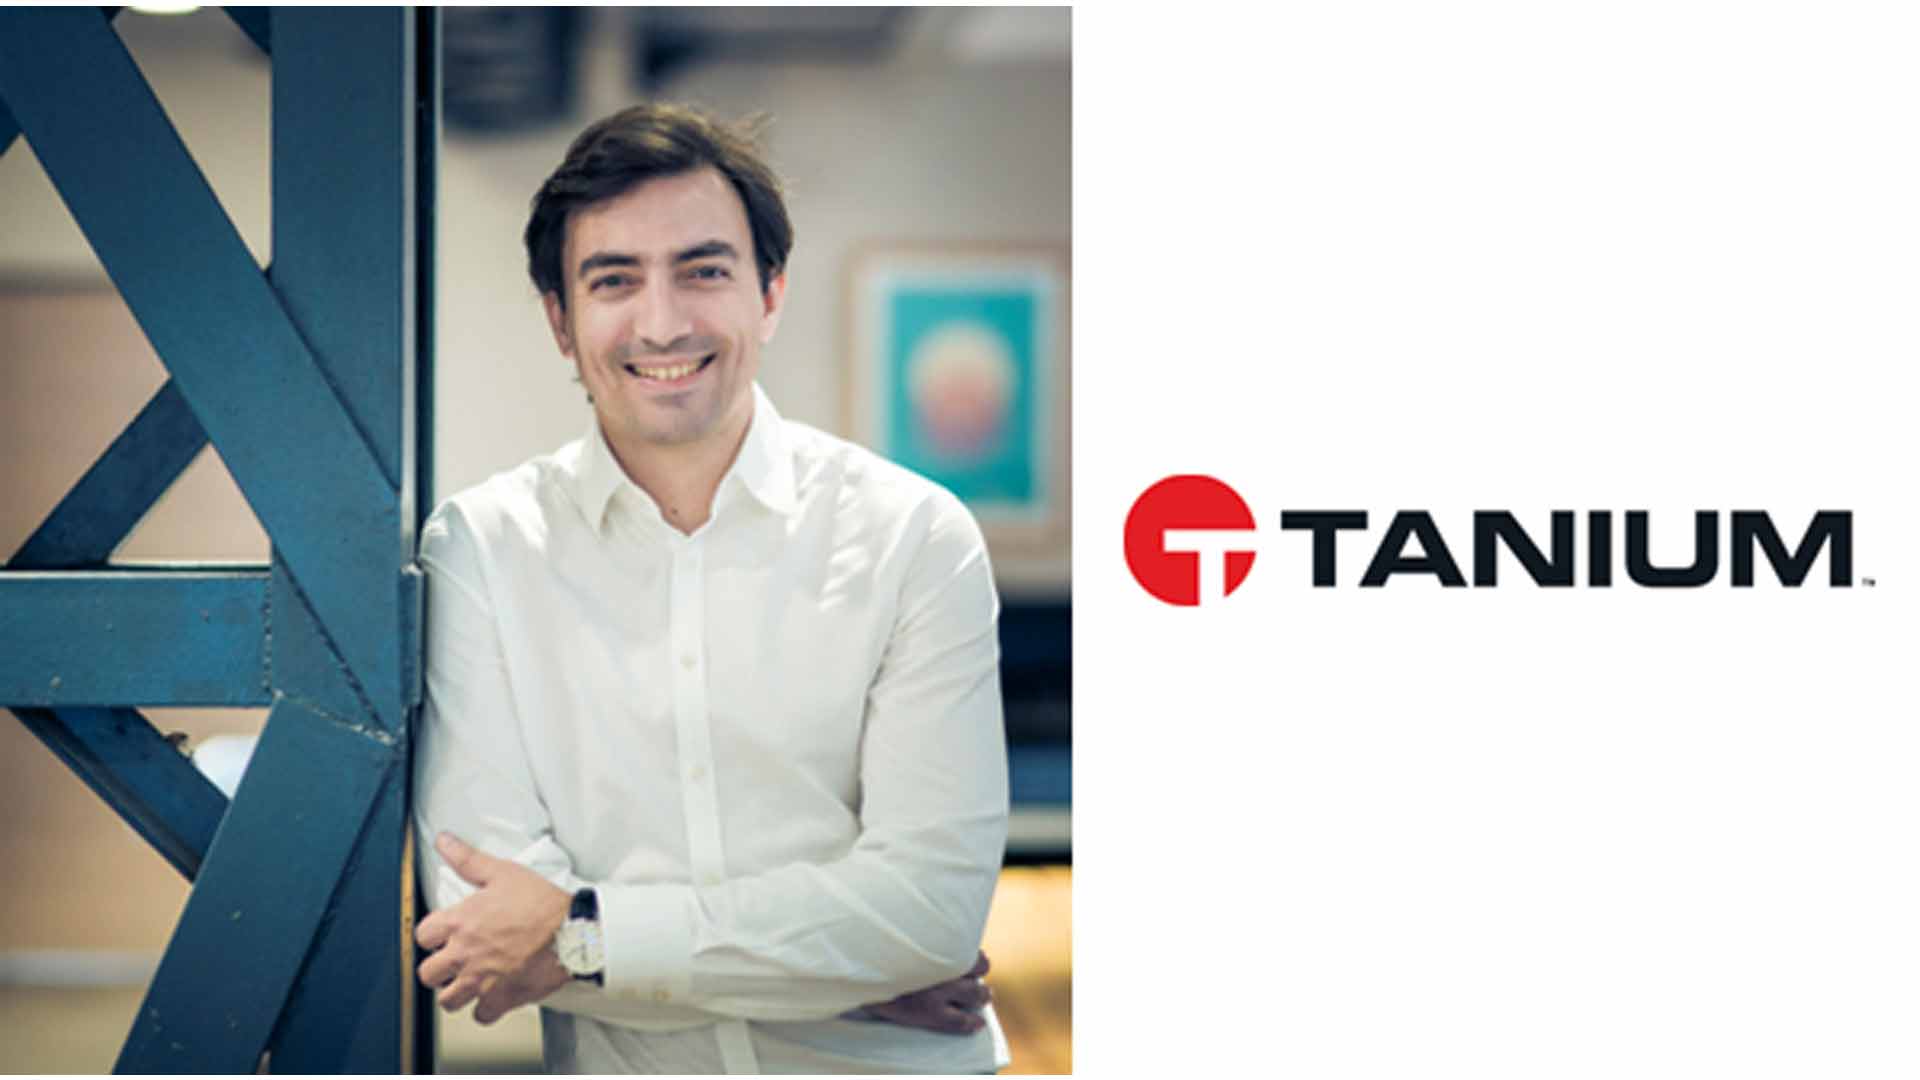 Tanium，全球网络安全领域的一颗明星，即将入驻巴黎！